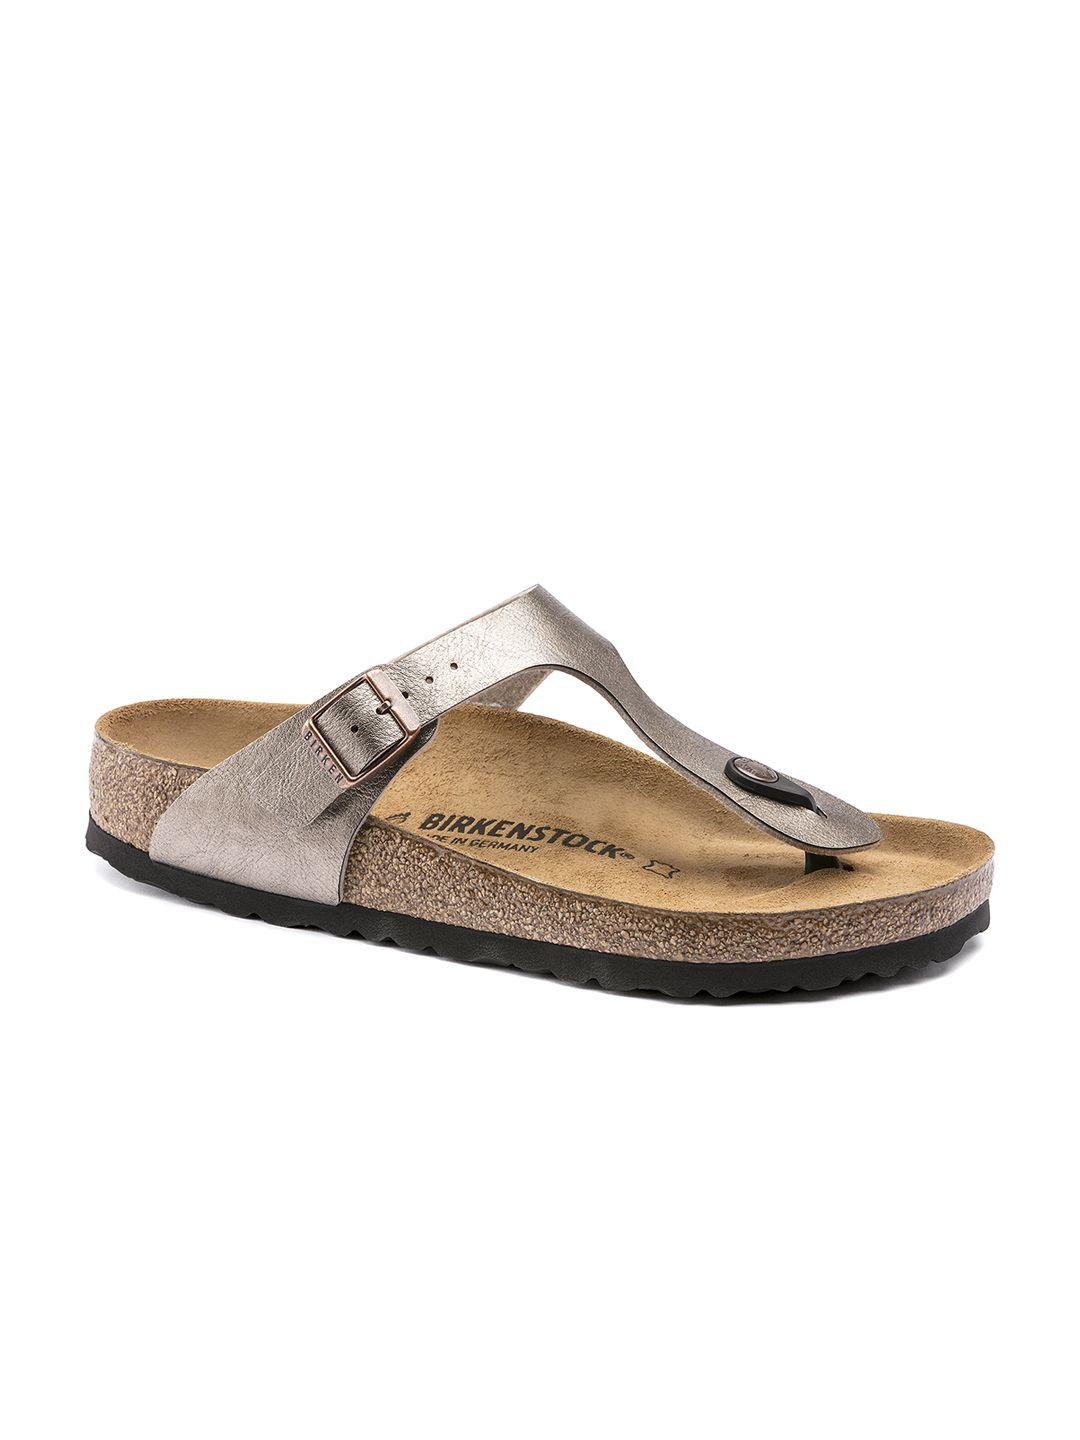 birkenstock women gizeh brown narrow width sandals